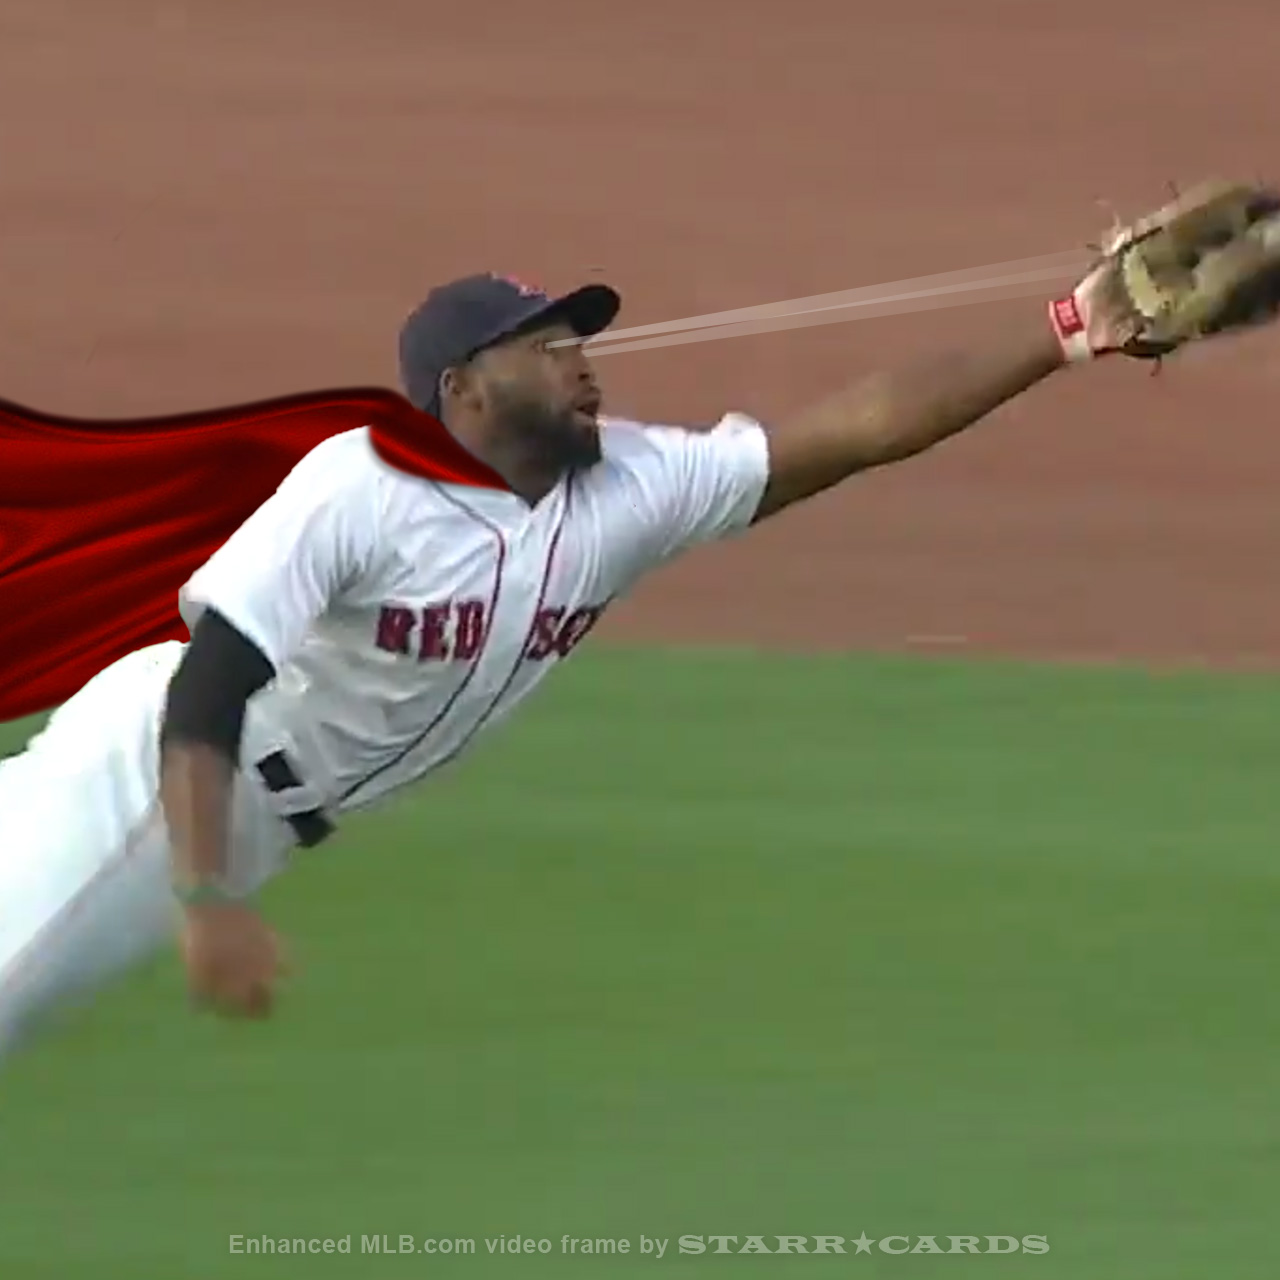 Red Sox outfielder Jackie Bradley Jr makes superman catch